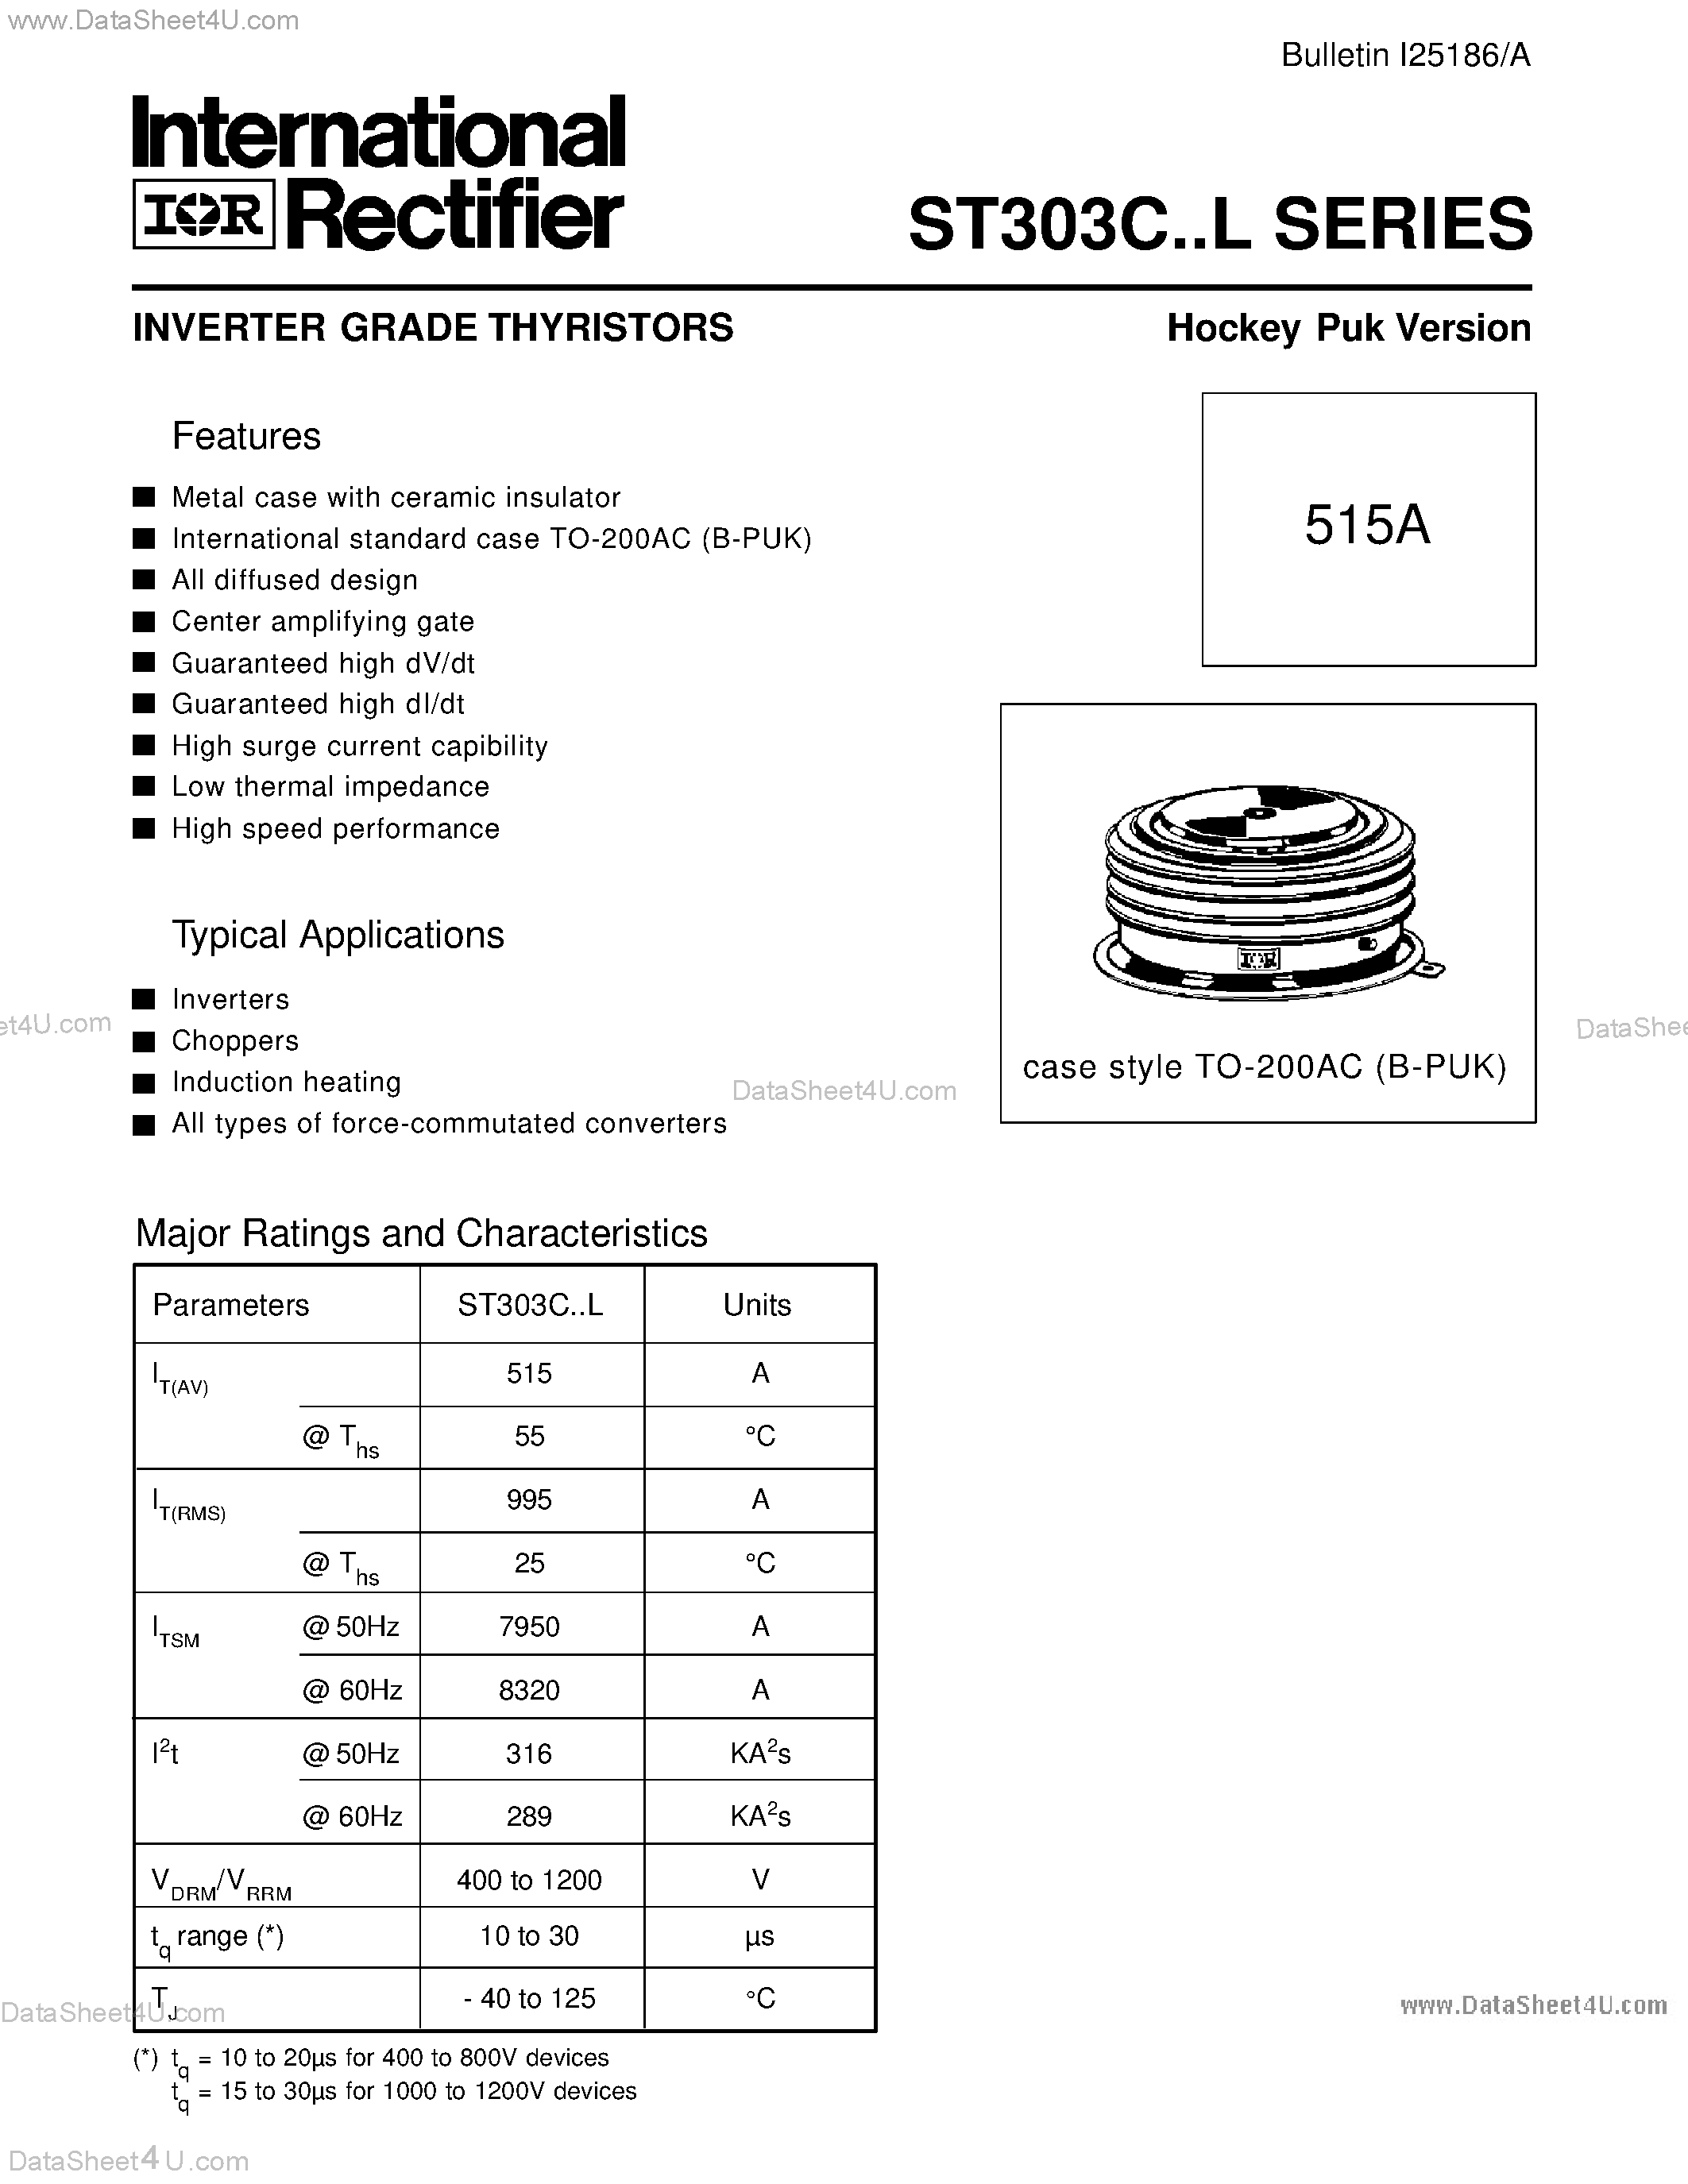 Datasheet ST303C - INVERTER GRADE THYRISTORS Hockey Puk Version page 2